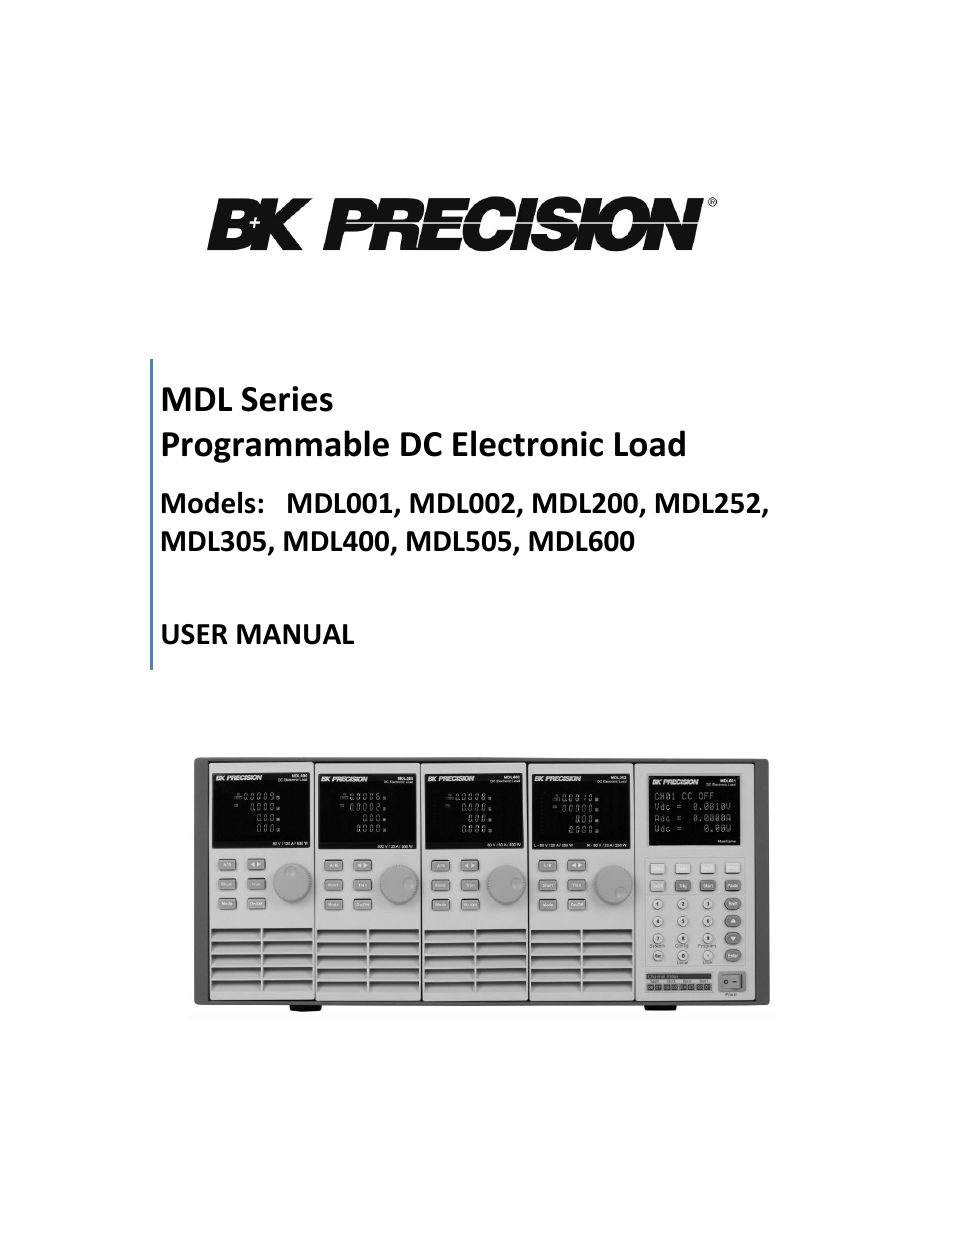 MDL Series - Manual